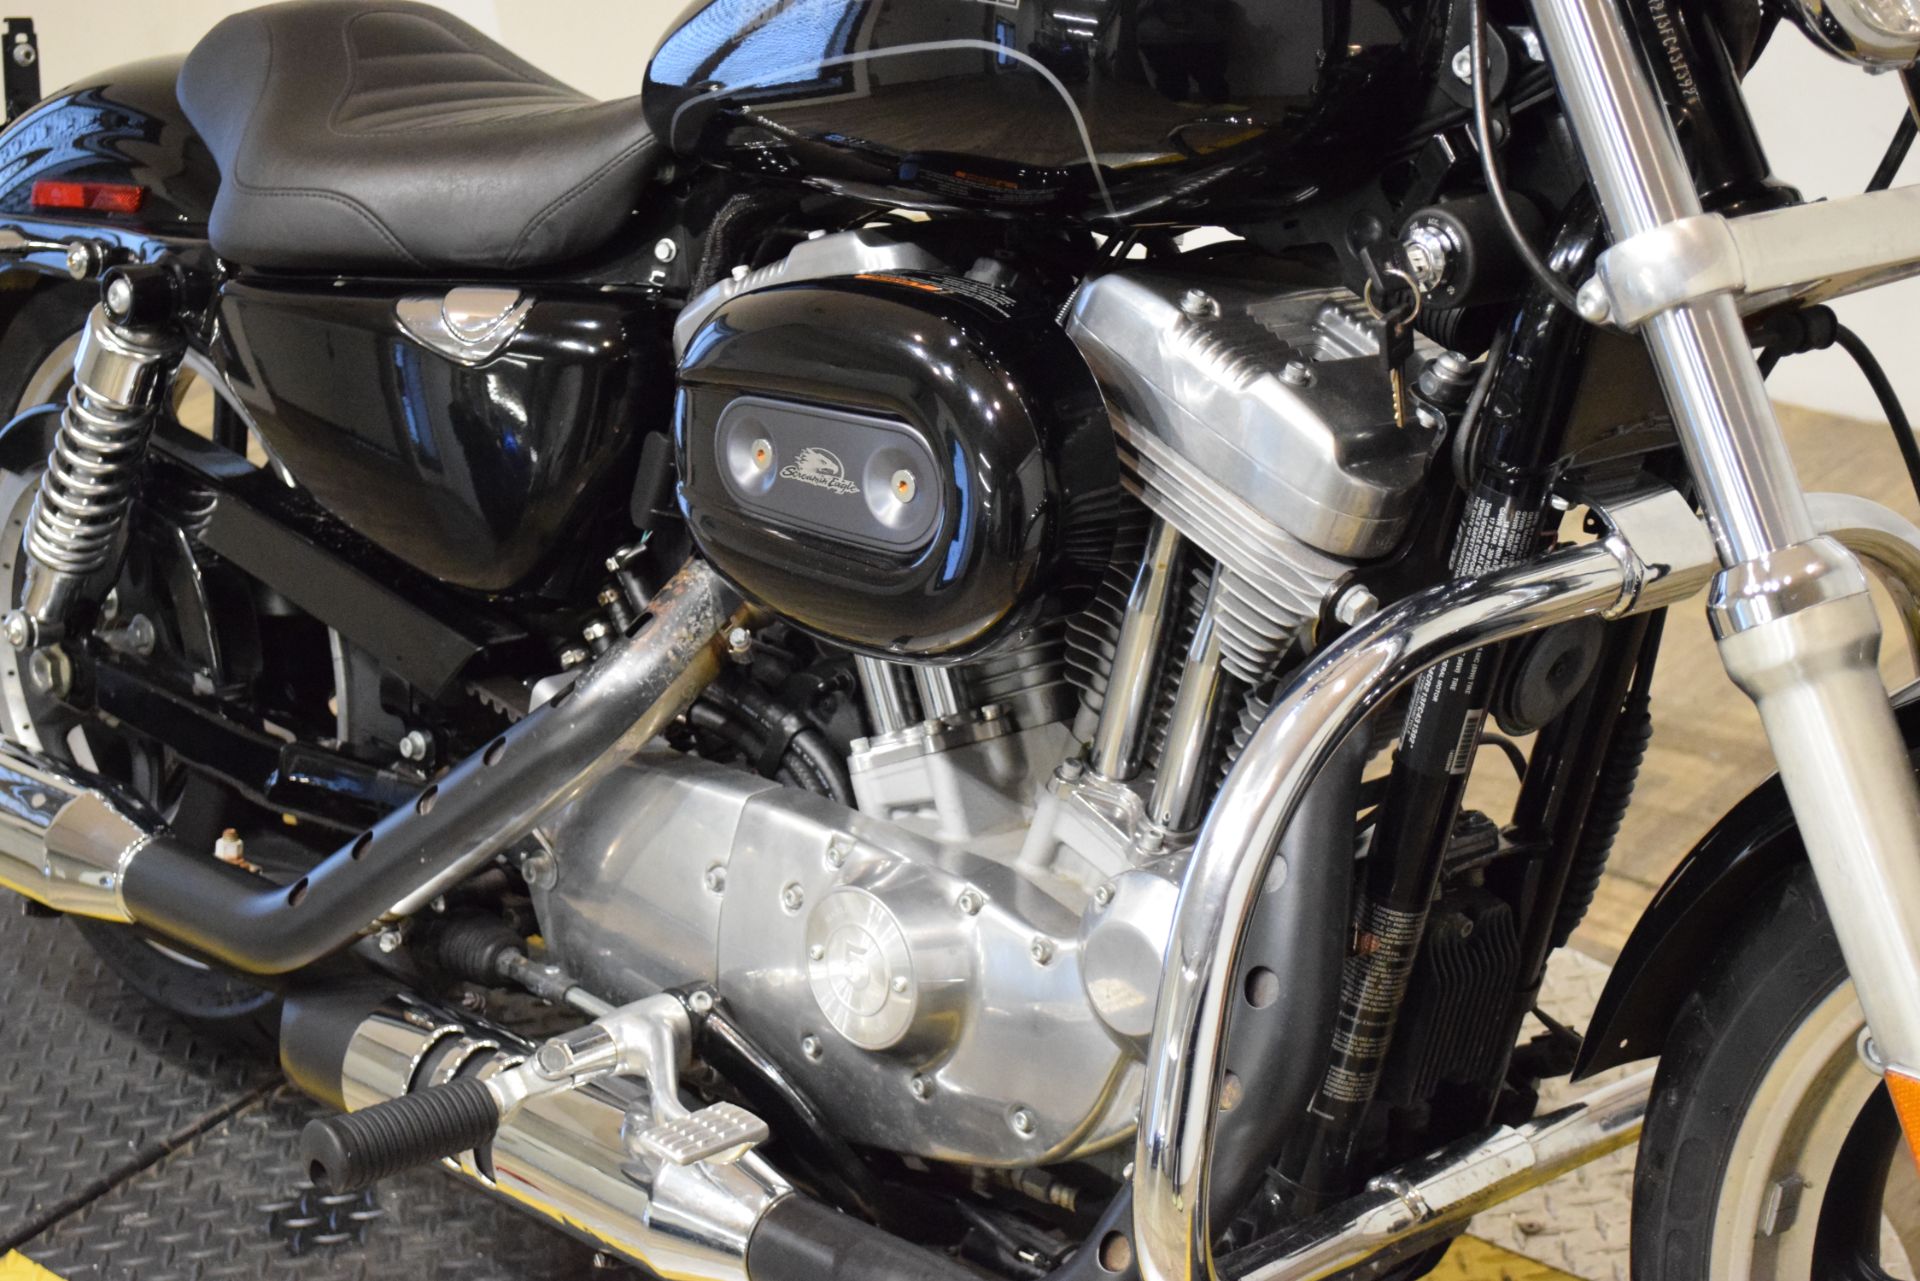 2015 Harley-Davidson SuperLow® in Wauconda, Illinois - Photo 4